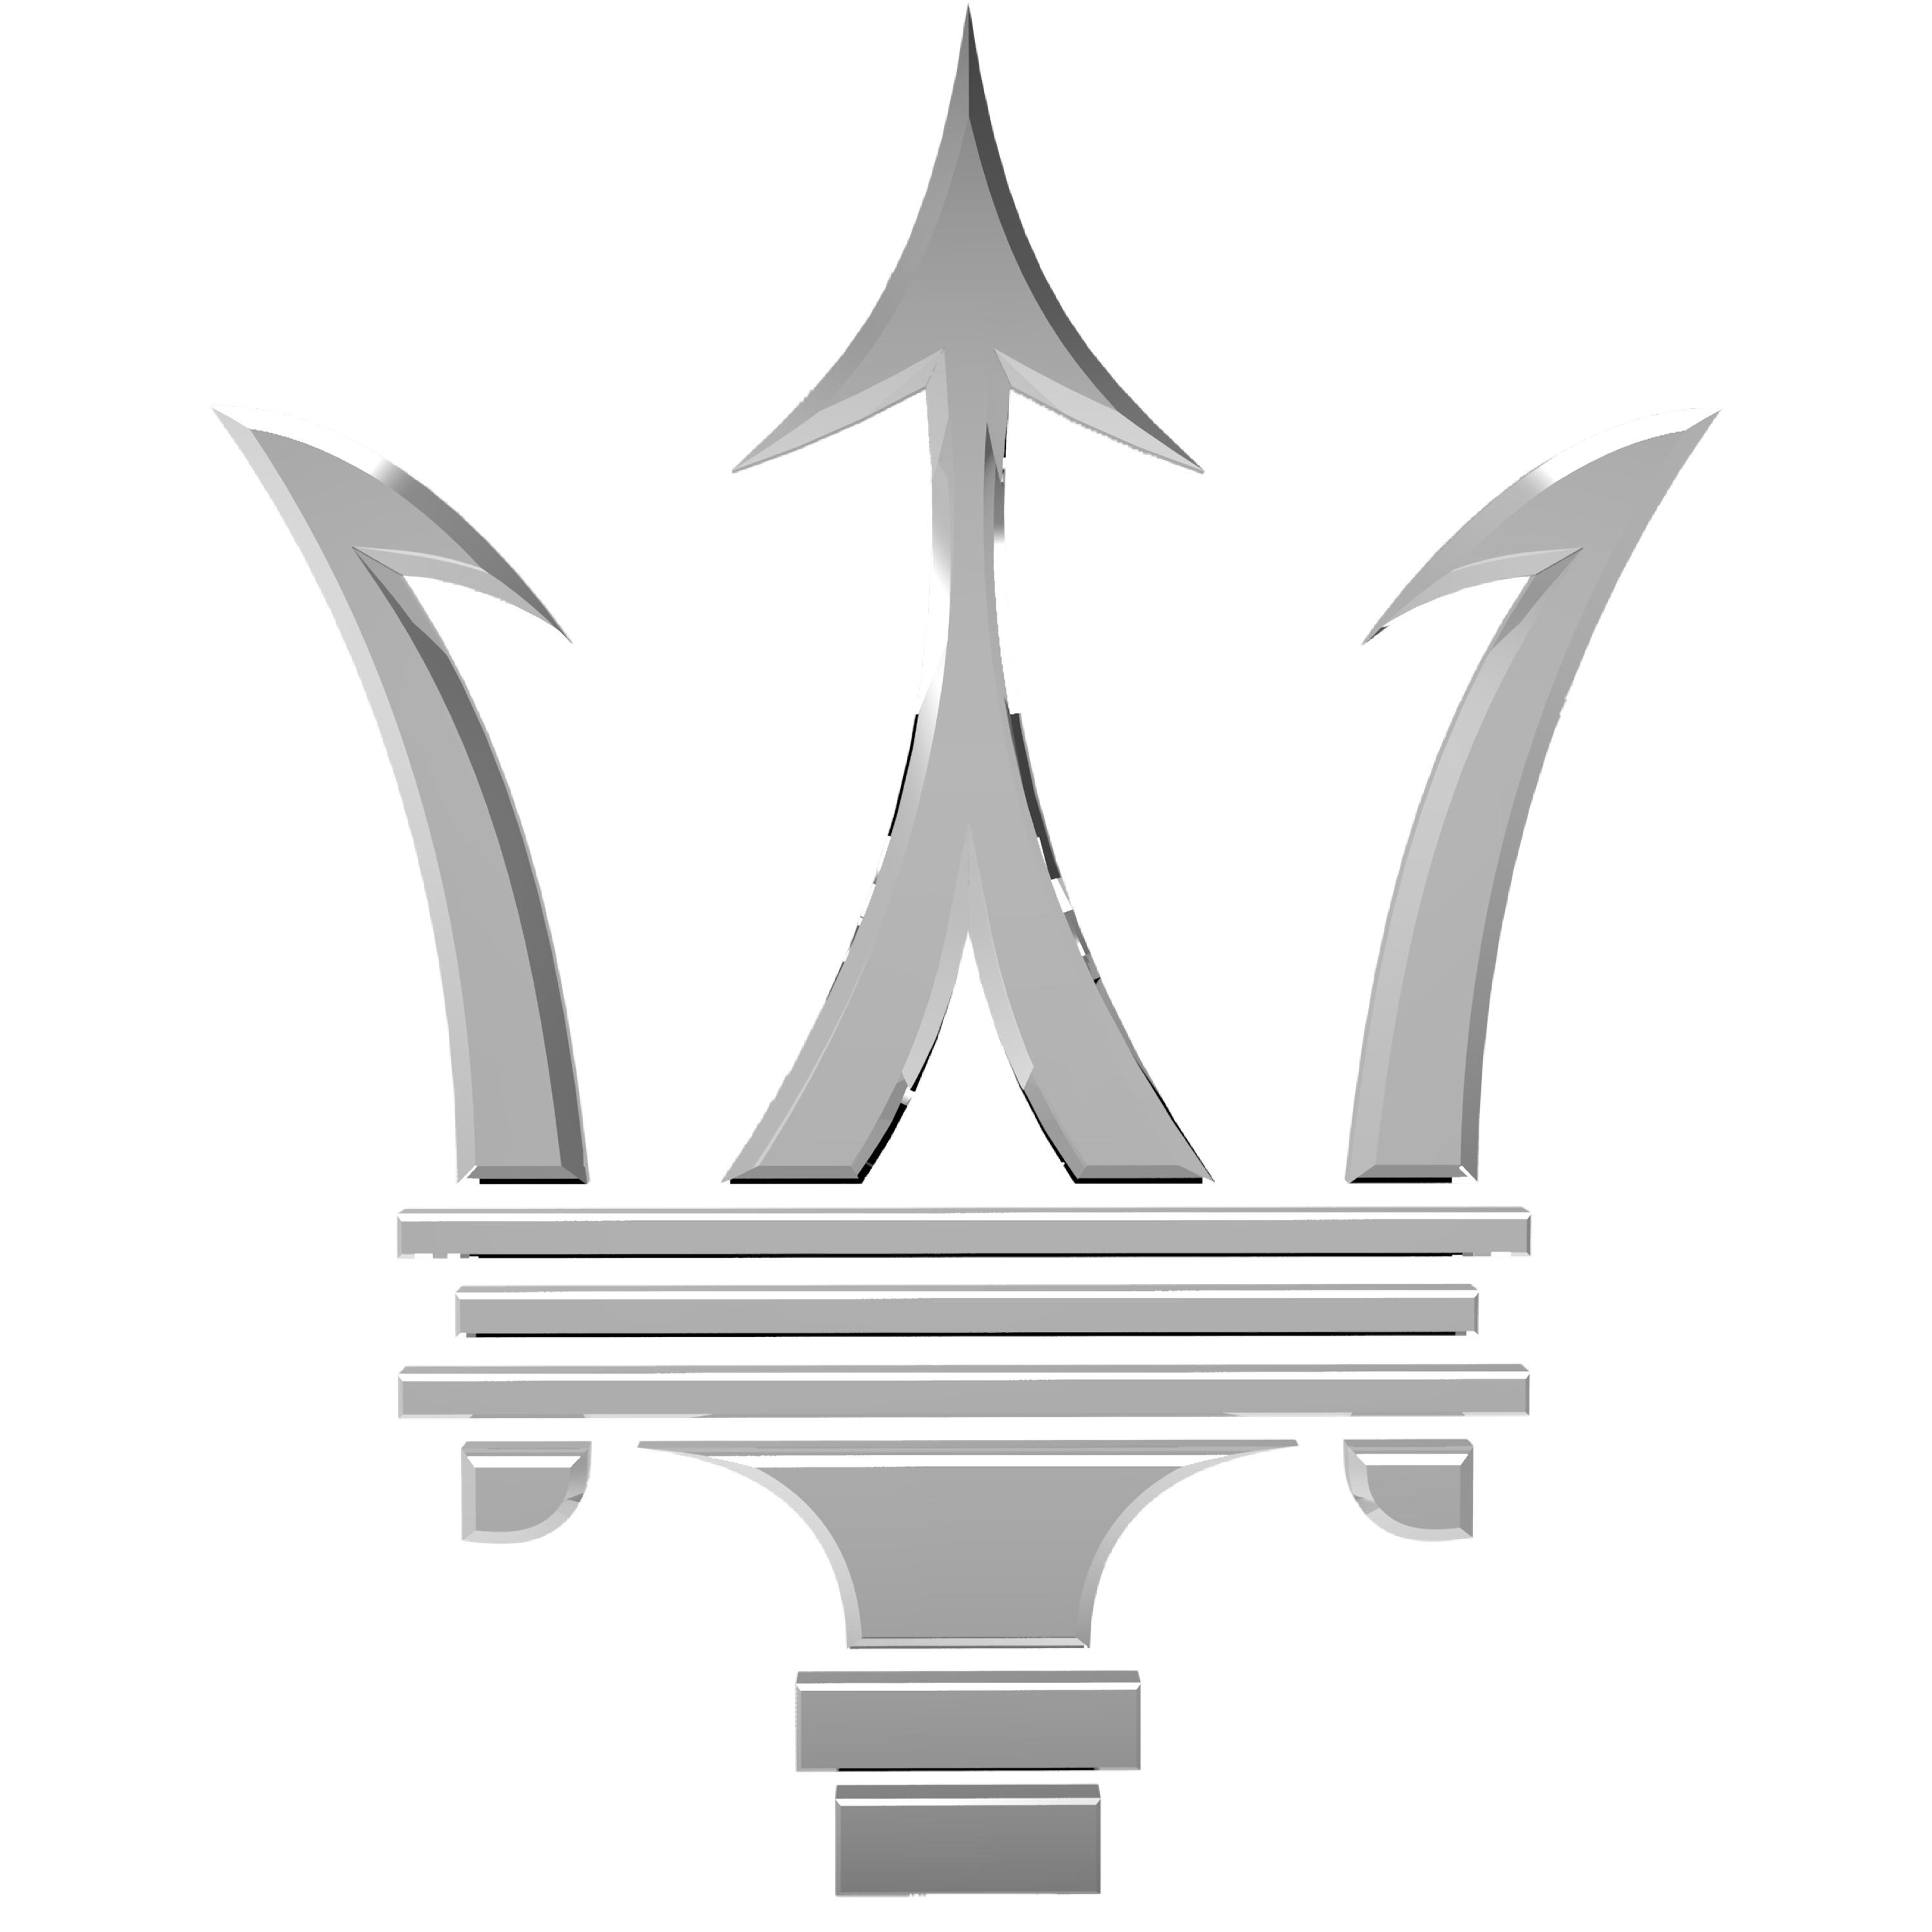 Maserati Logo PNG Image